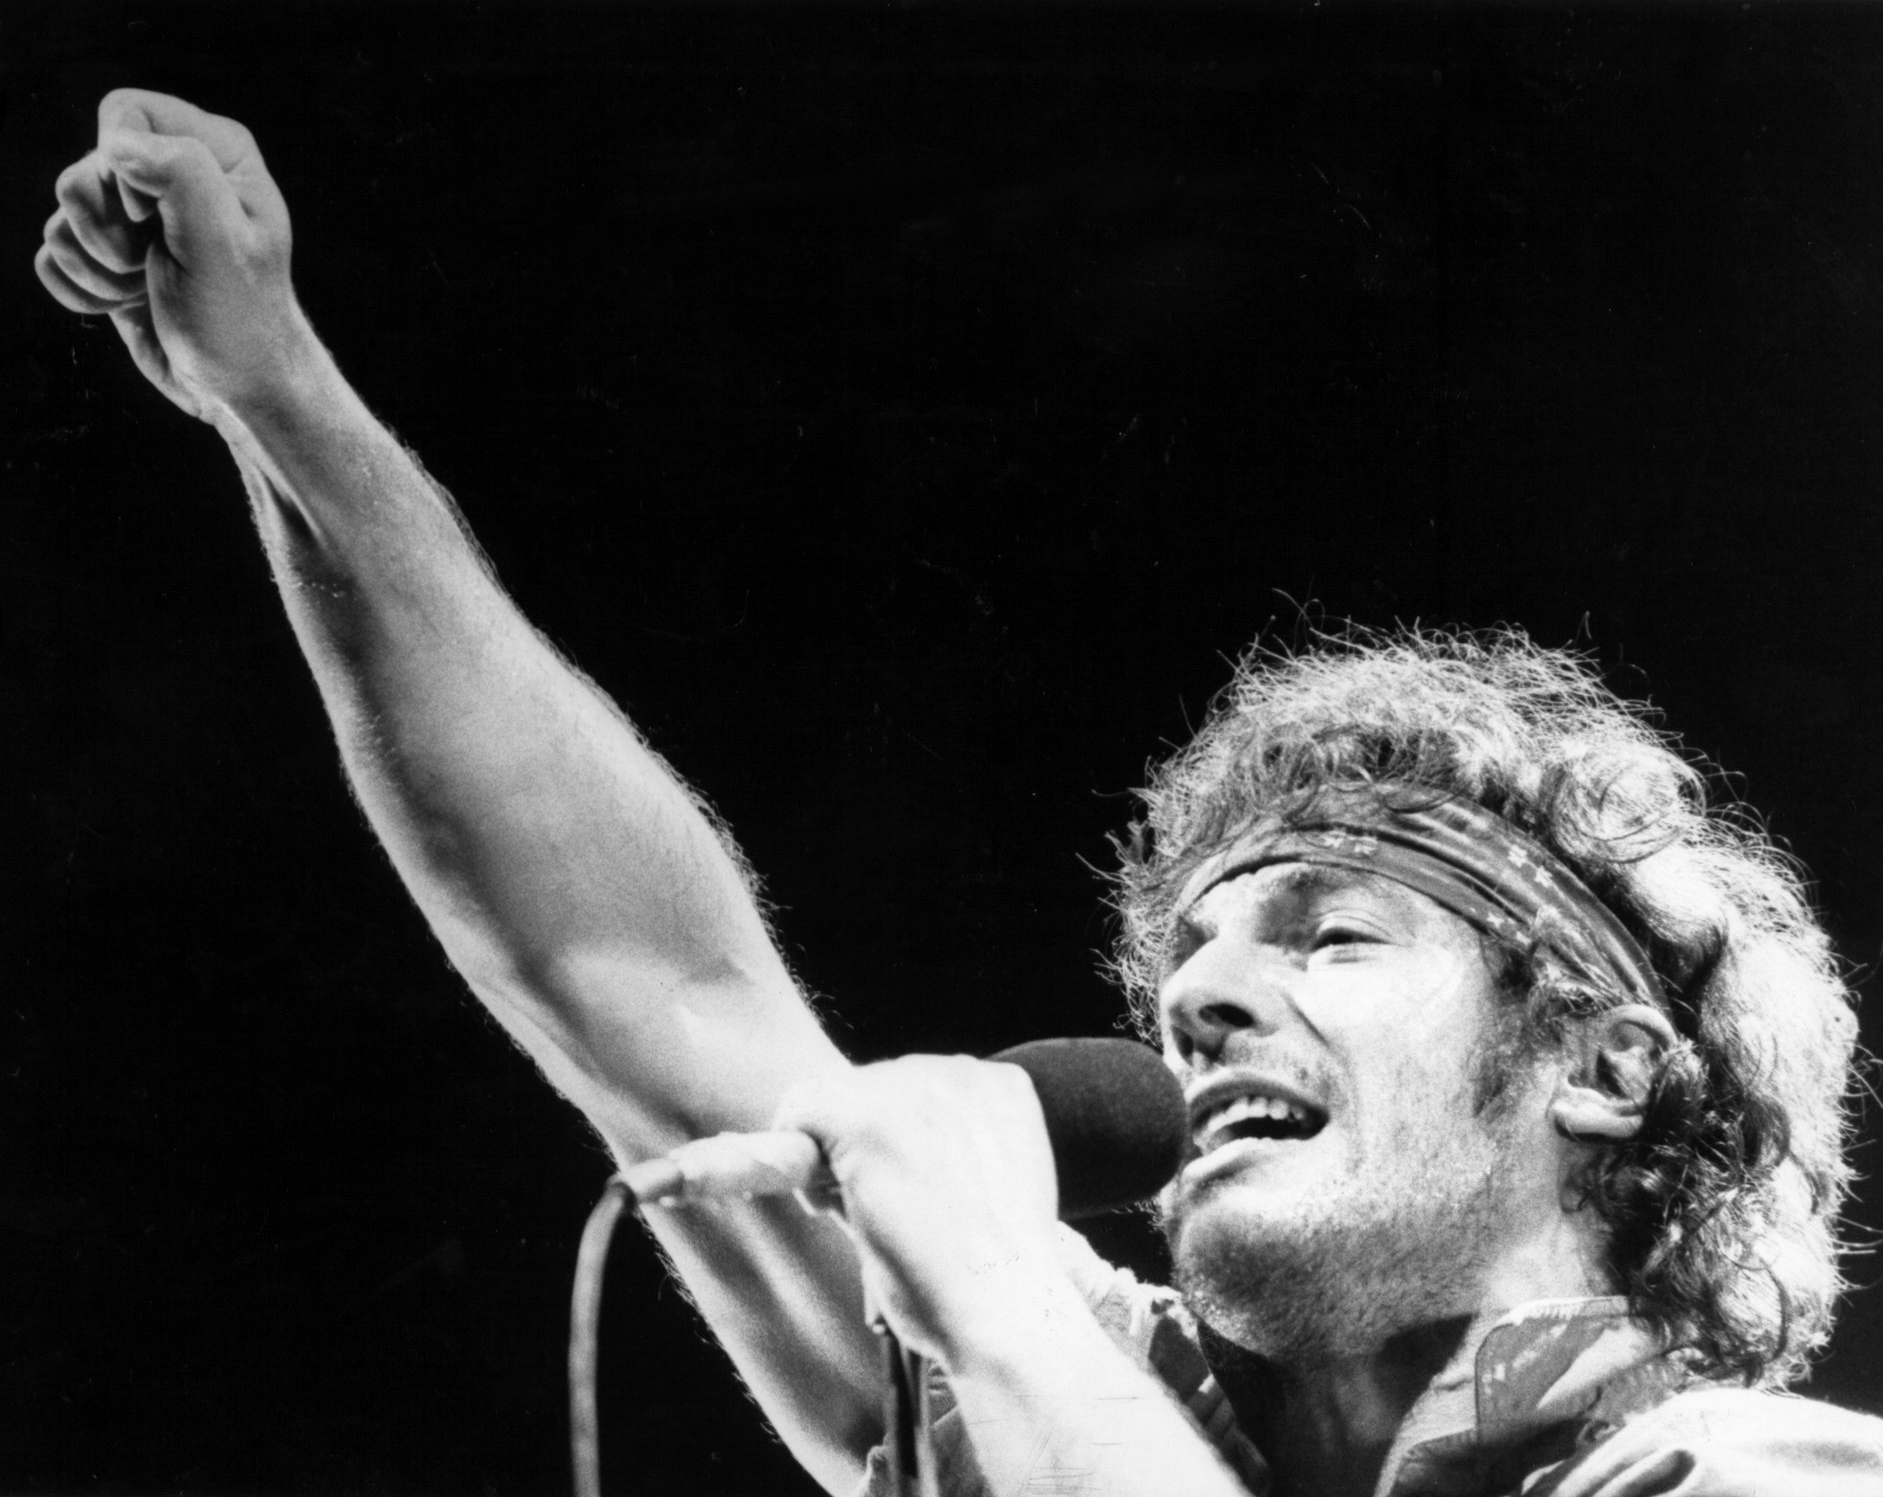 Bruce Springsteen raising his fist